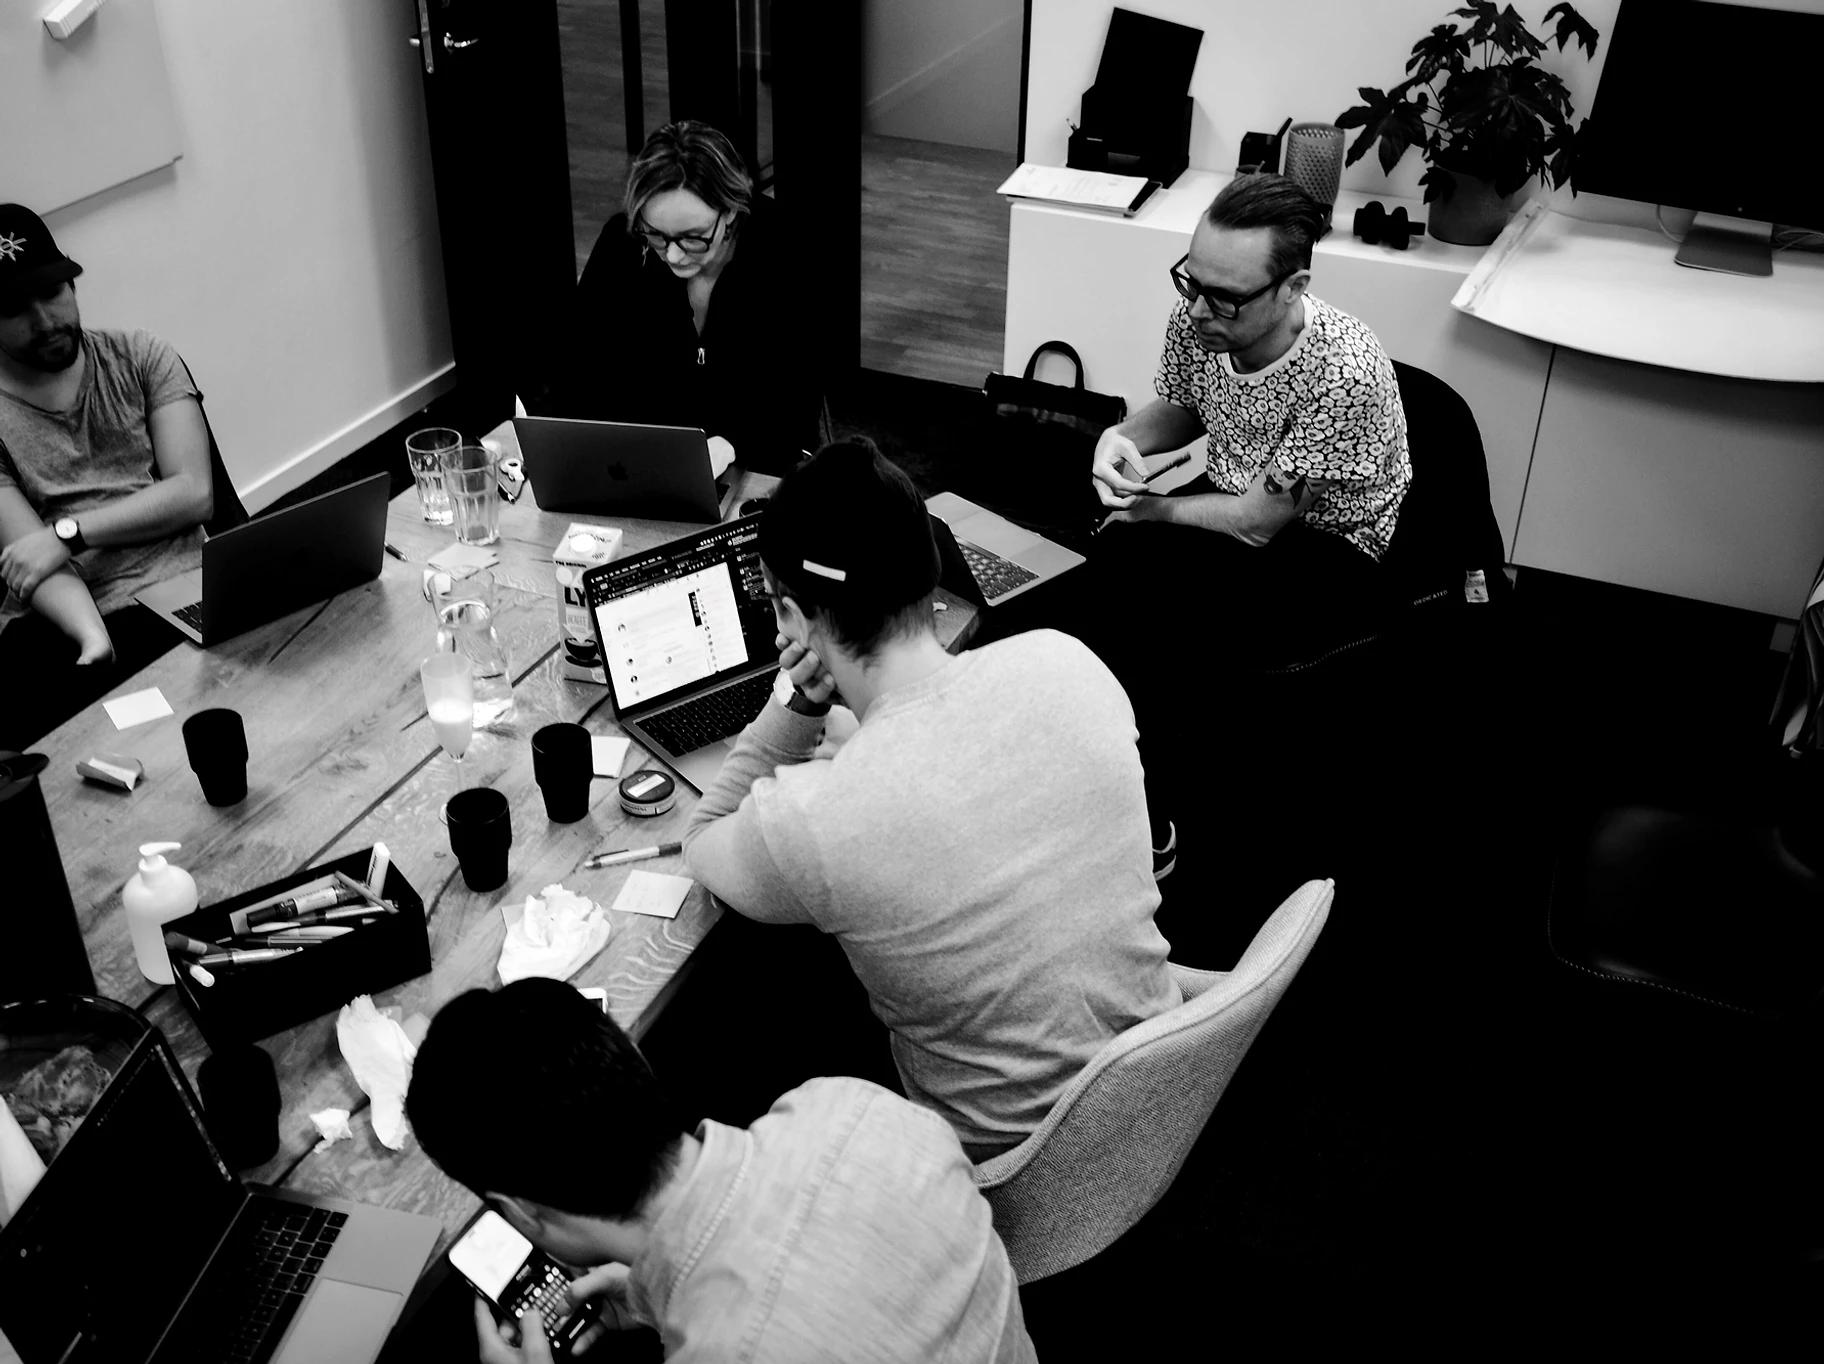 Fotografi taget med fågelperspektiv på fem personer som sitter vi arbetsbord, arbetar vi datorer. På bordet står kaffekoppar, servetter, pennor.